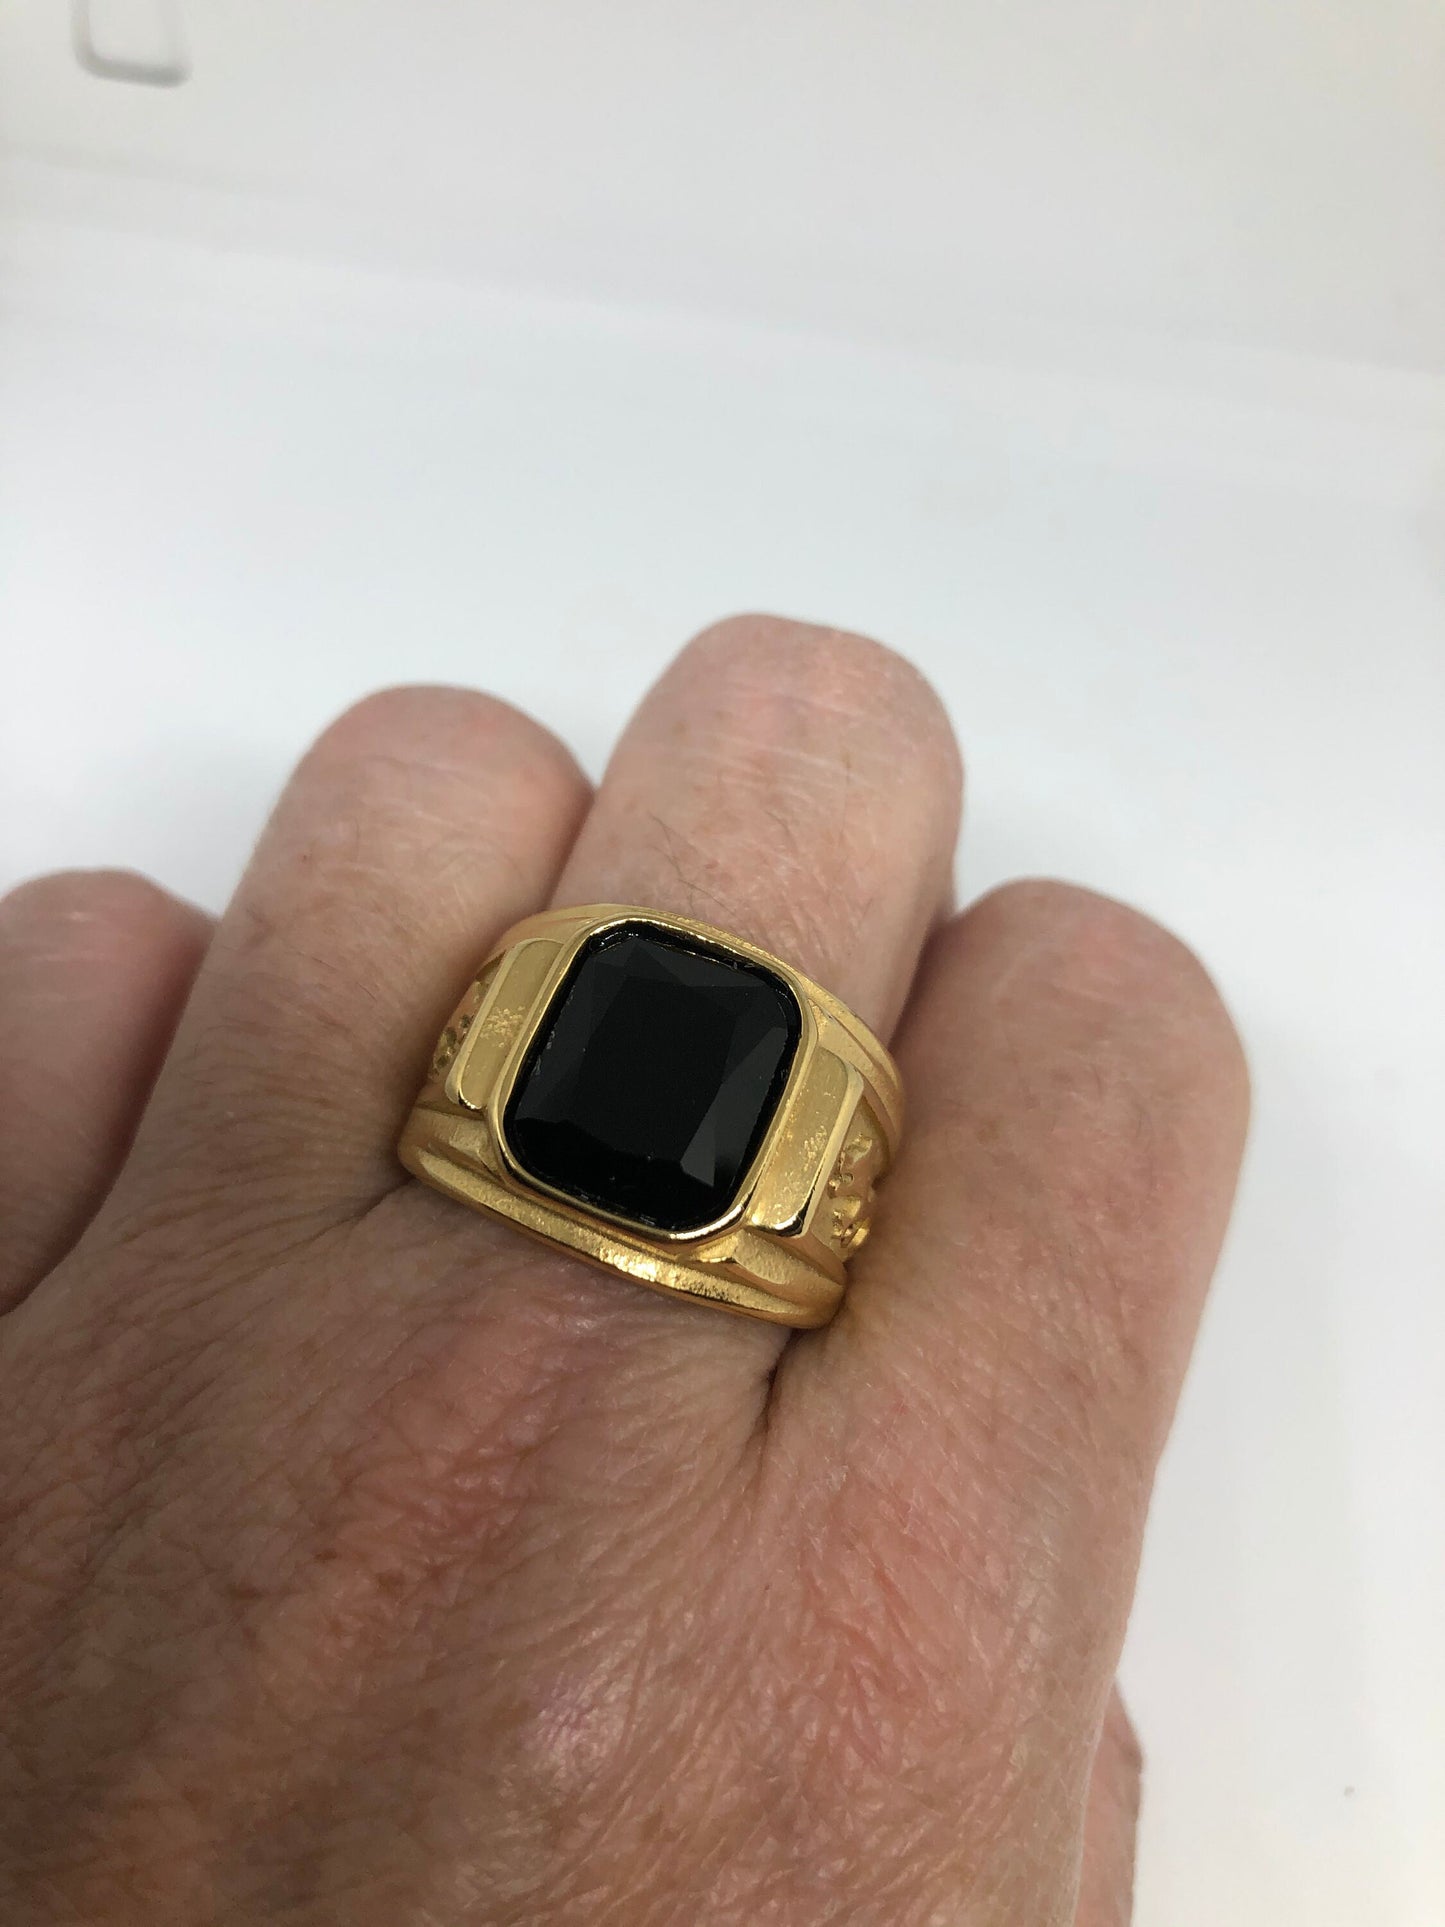 Vintage Gothic Black Onyx Dragon Golden Stainless Steel Men's Ring